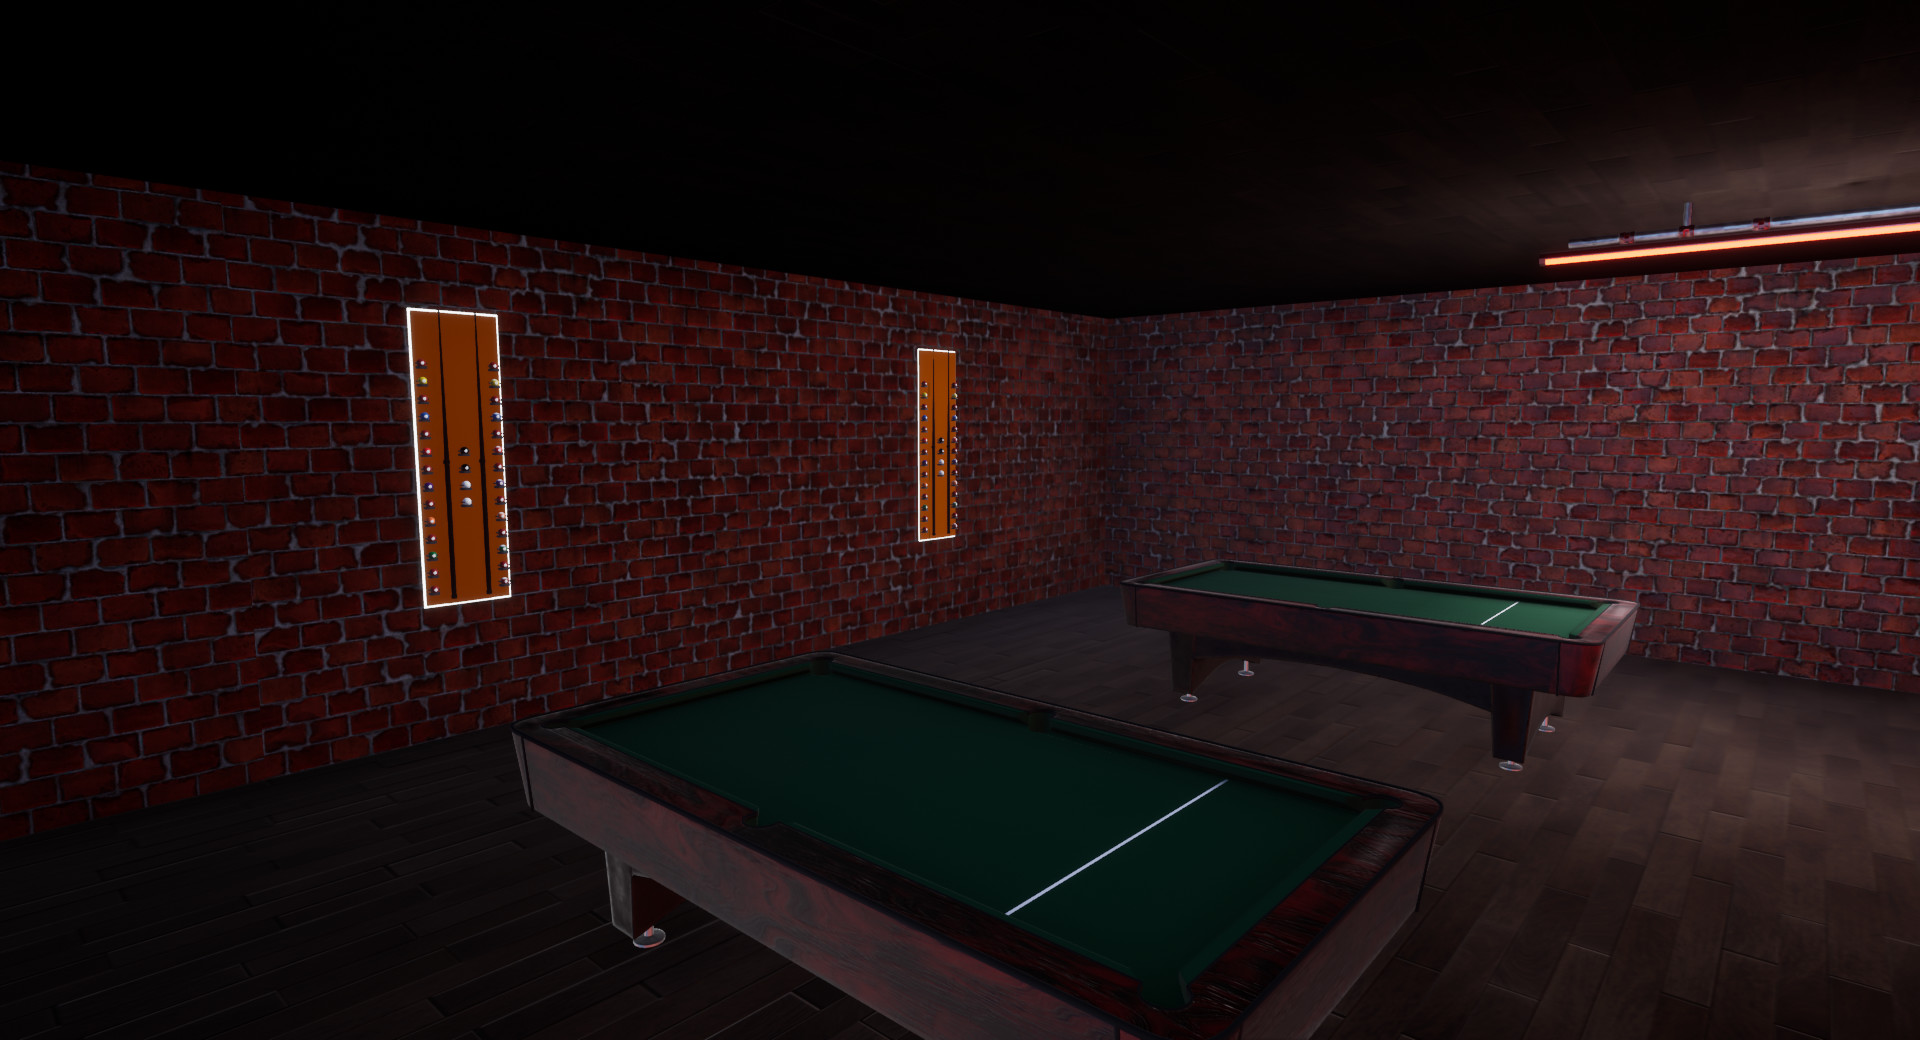 Welcome to the Pool Hall screenshot